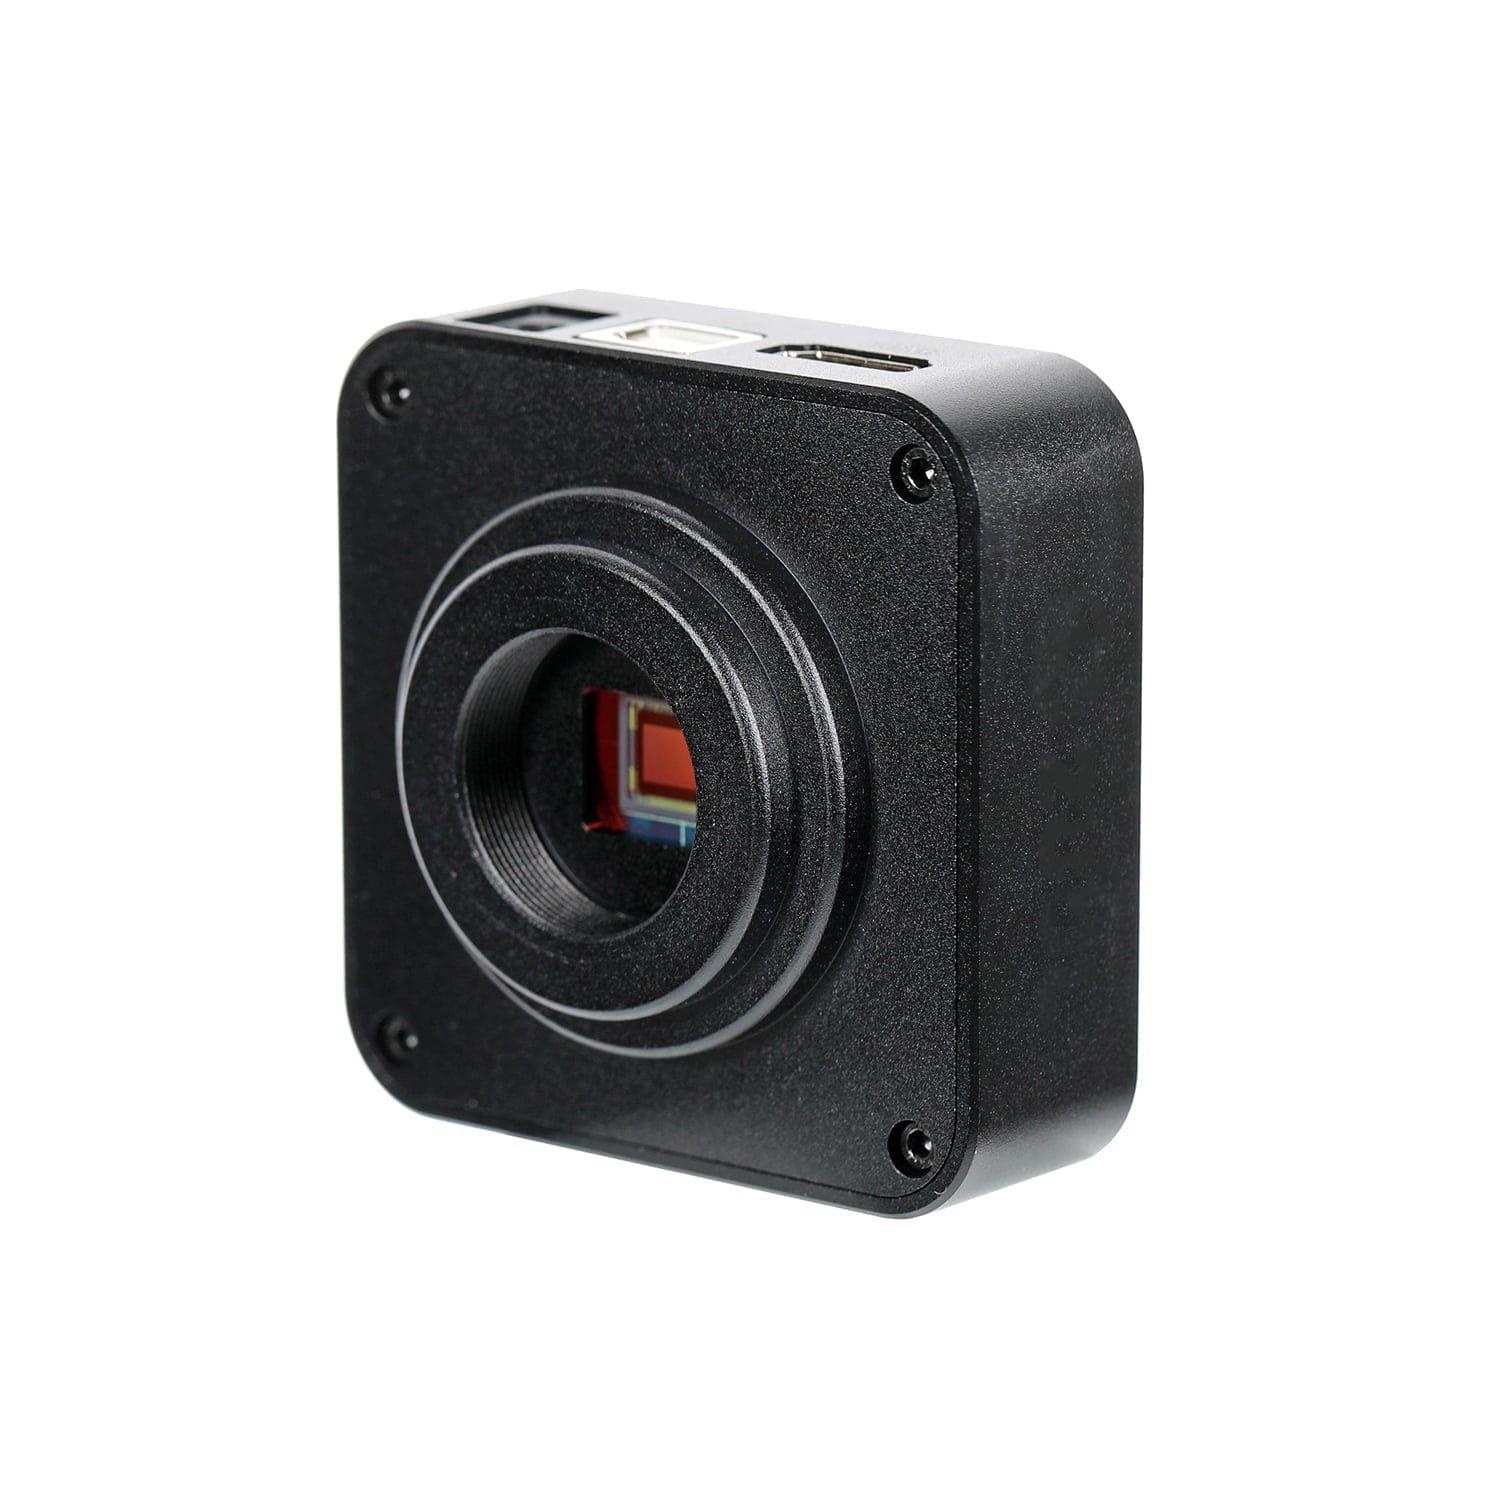 Kamera do mikroskopu 38MP HDMI USB 2.0